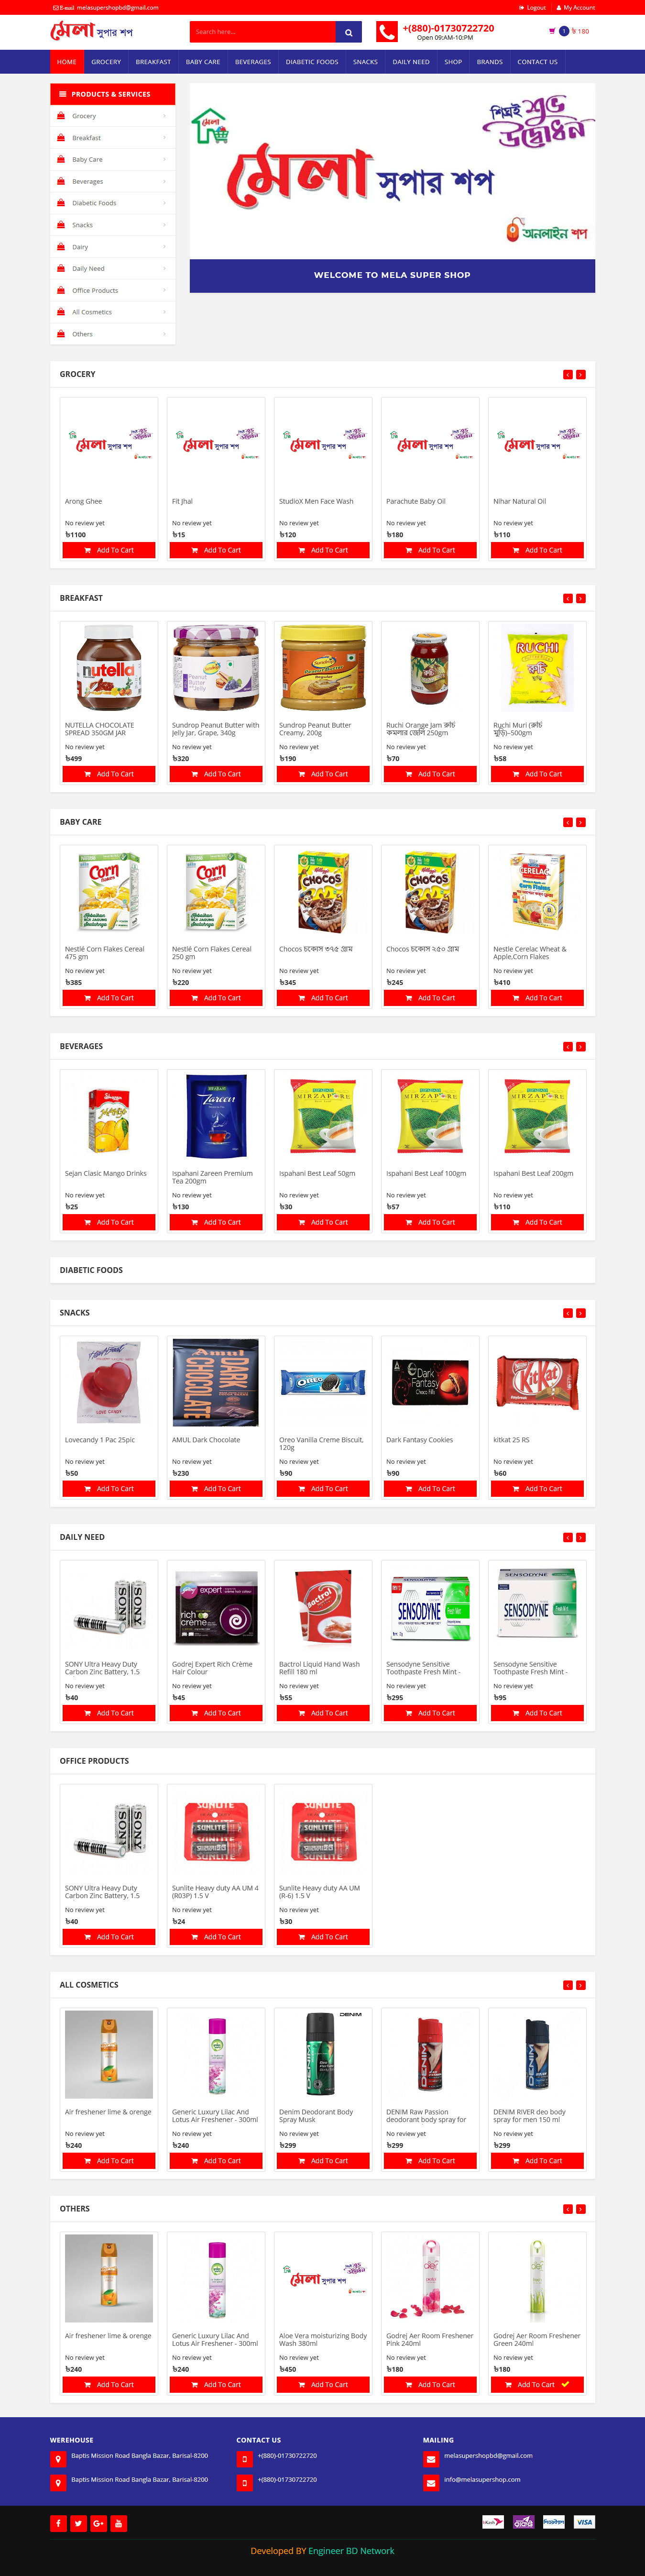 Super shop E-commerce Web Application & POS